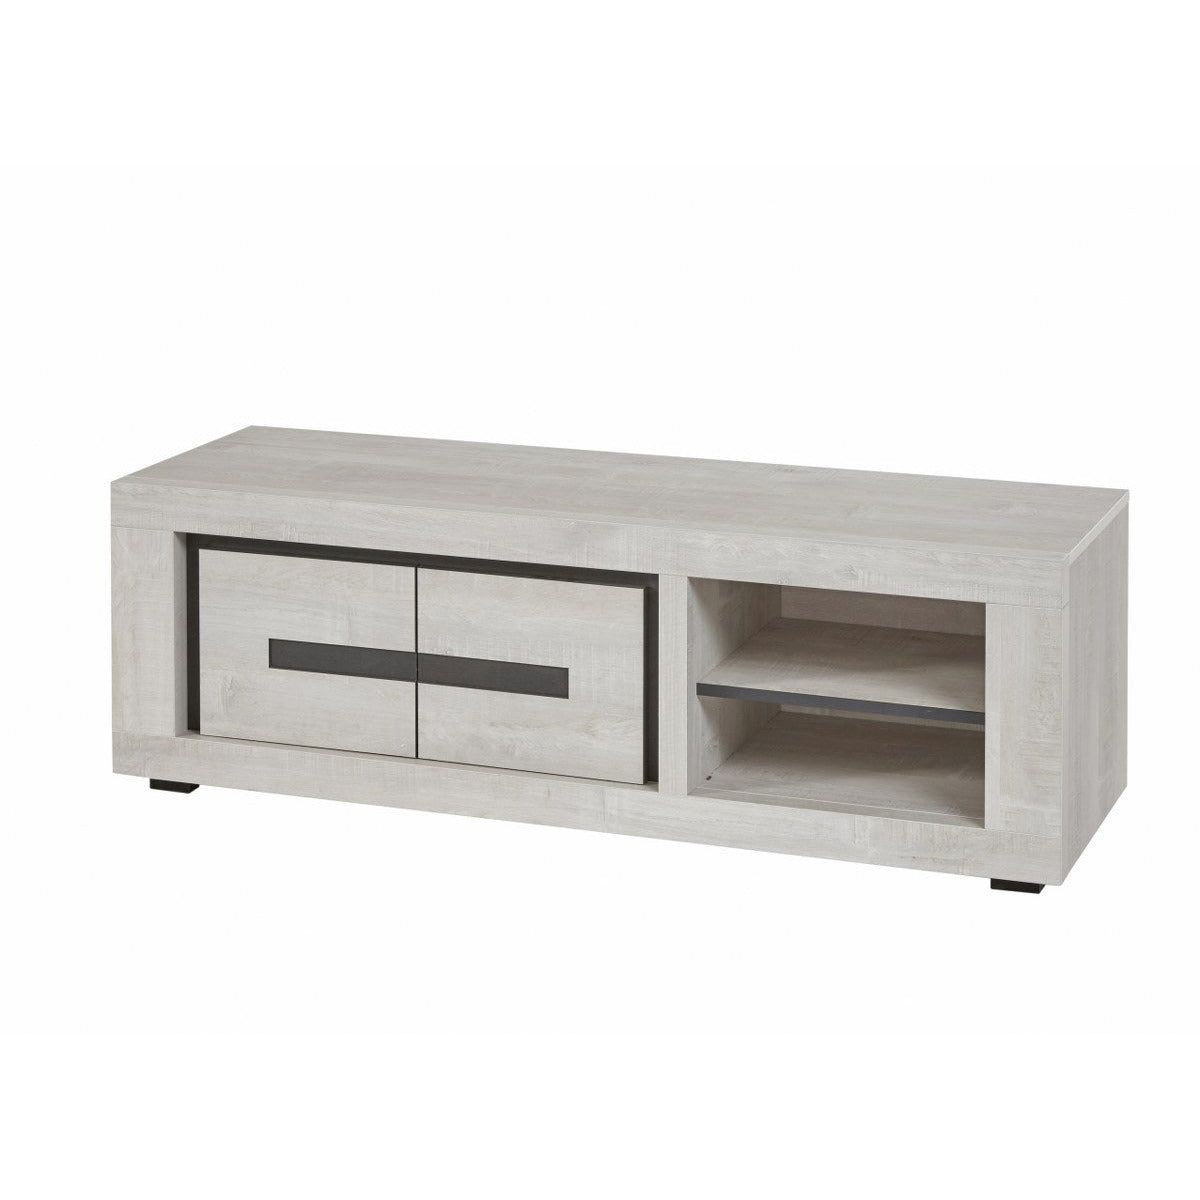 TV cabinet | Furniture series Vento | light gray, natural | 150x